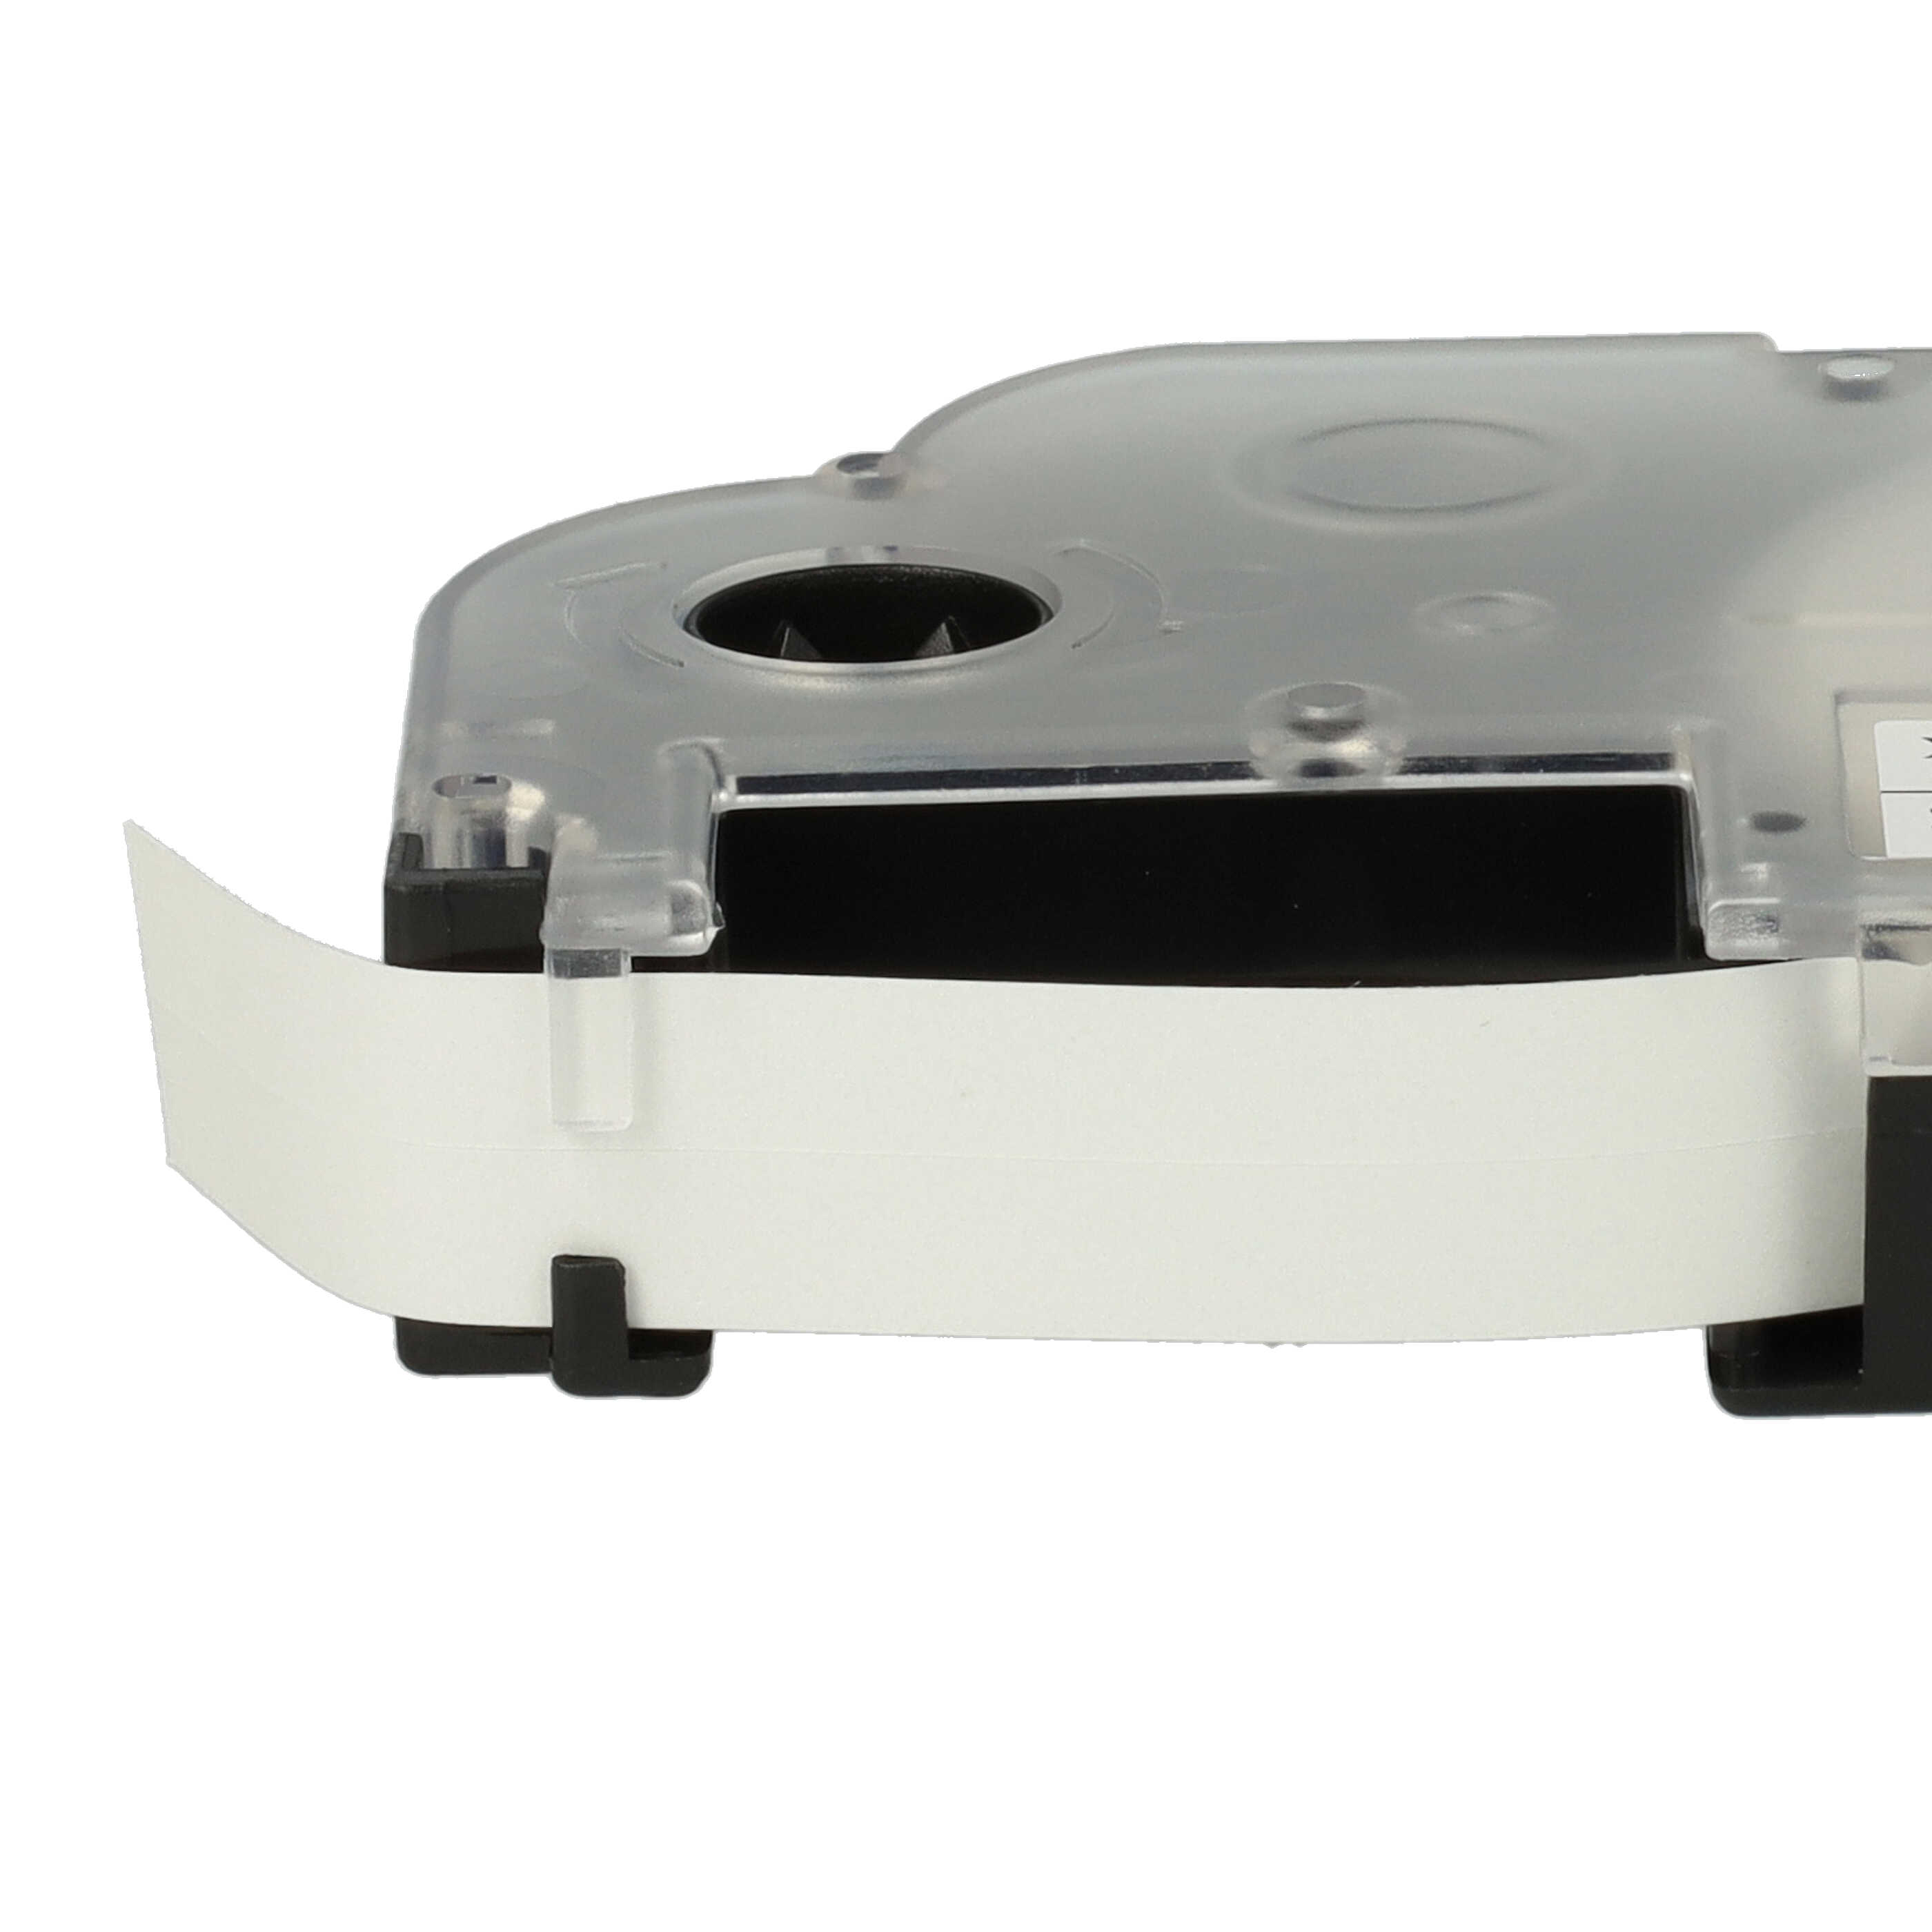 5x Cassetta nastro sostituisce Casio XR-9WE1 per etichettatrice Casio 9mm nero su bianco